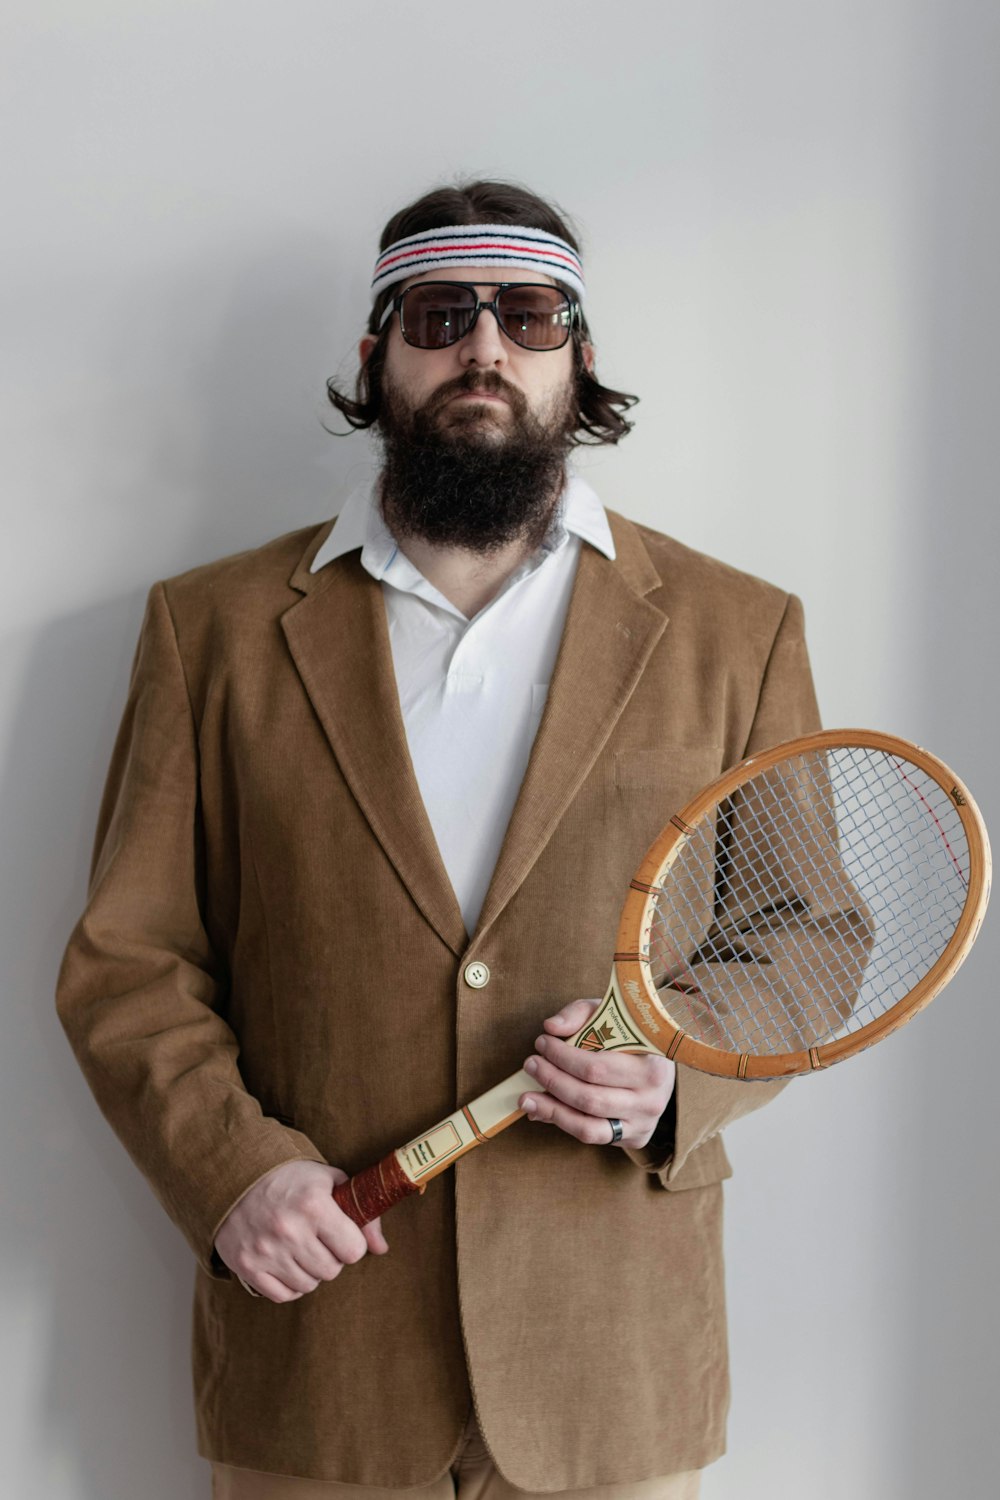 a man with a beard holding a tennis racket